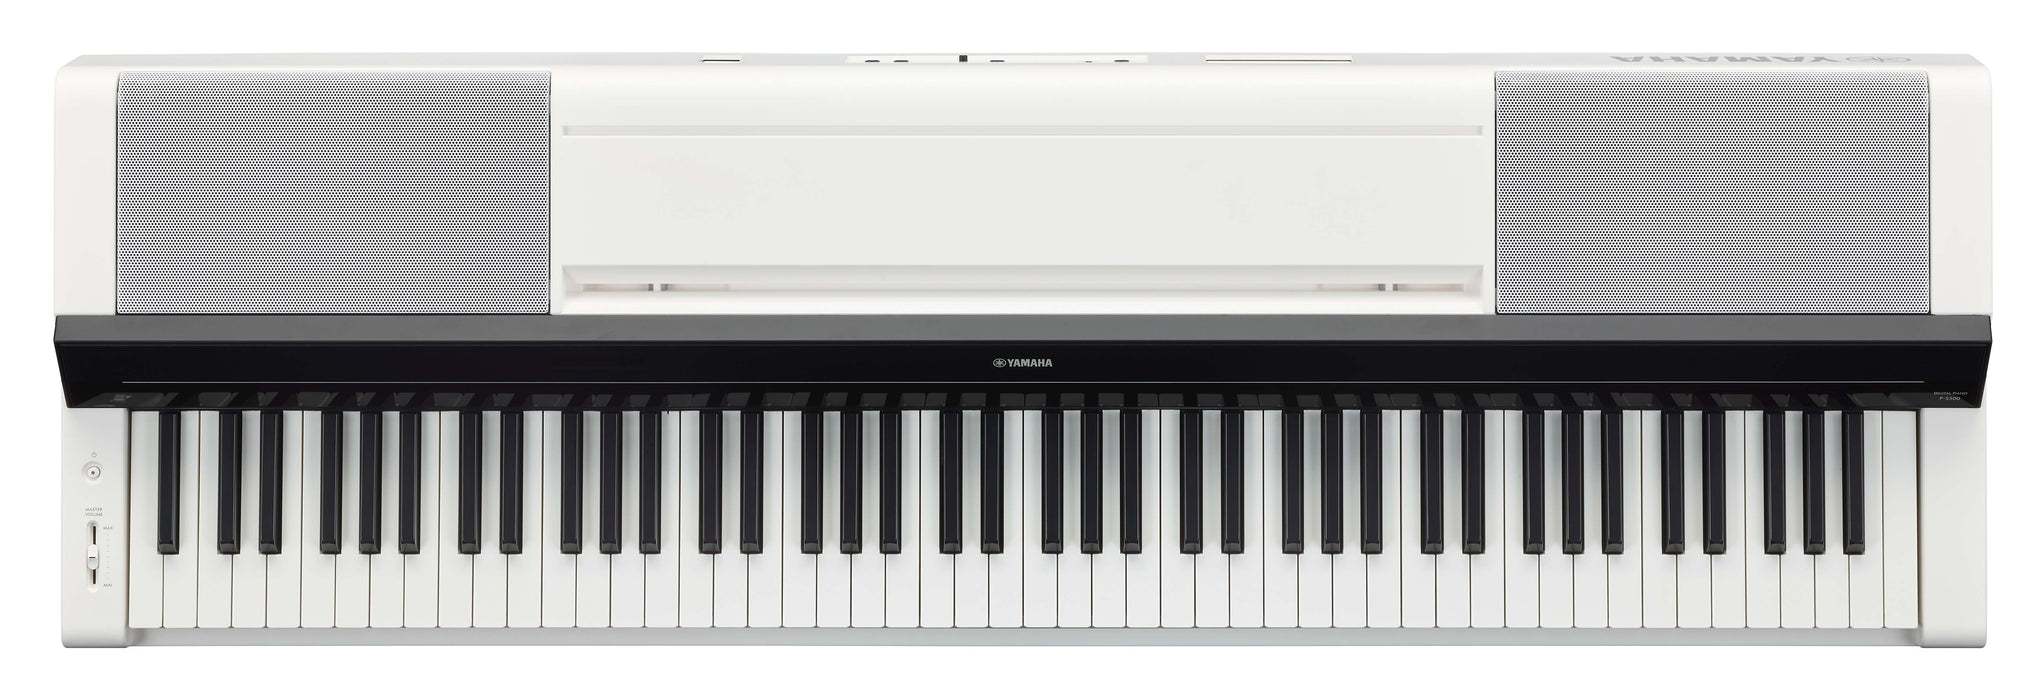 Yamaha PS500WH 88 Key Portable Digital Piano - White